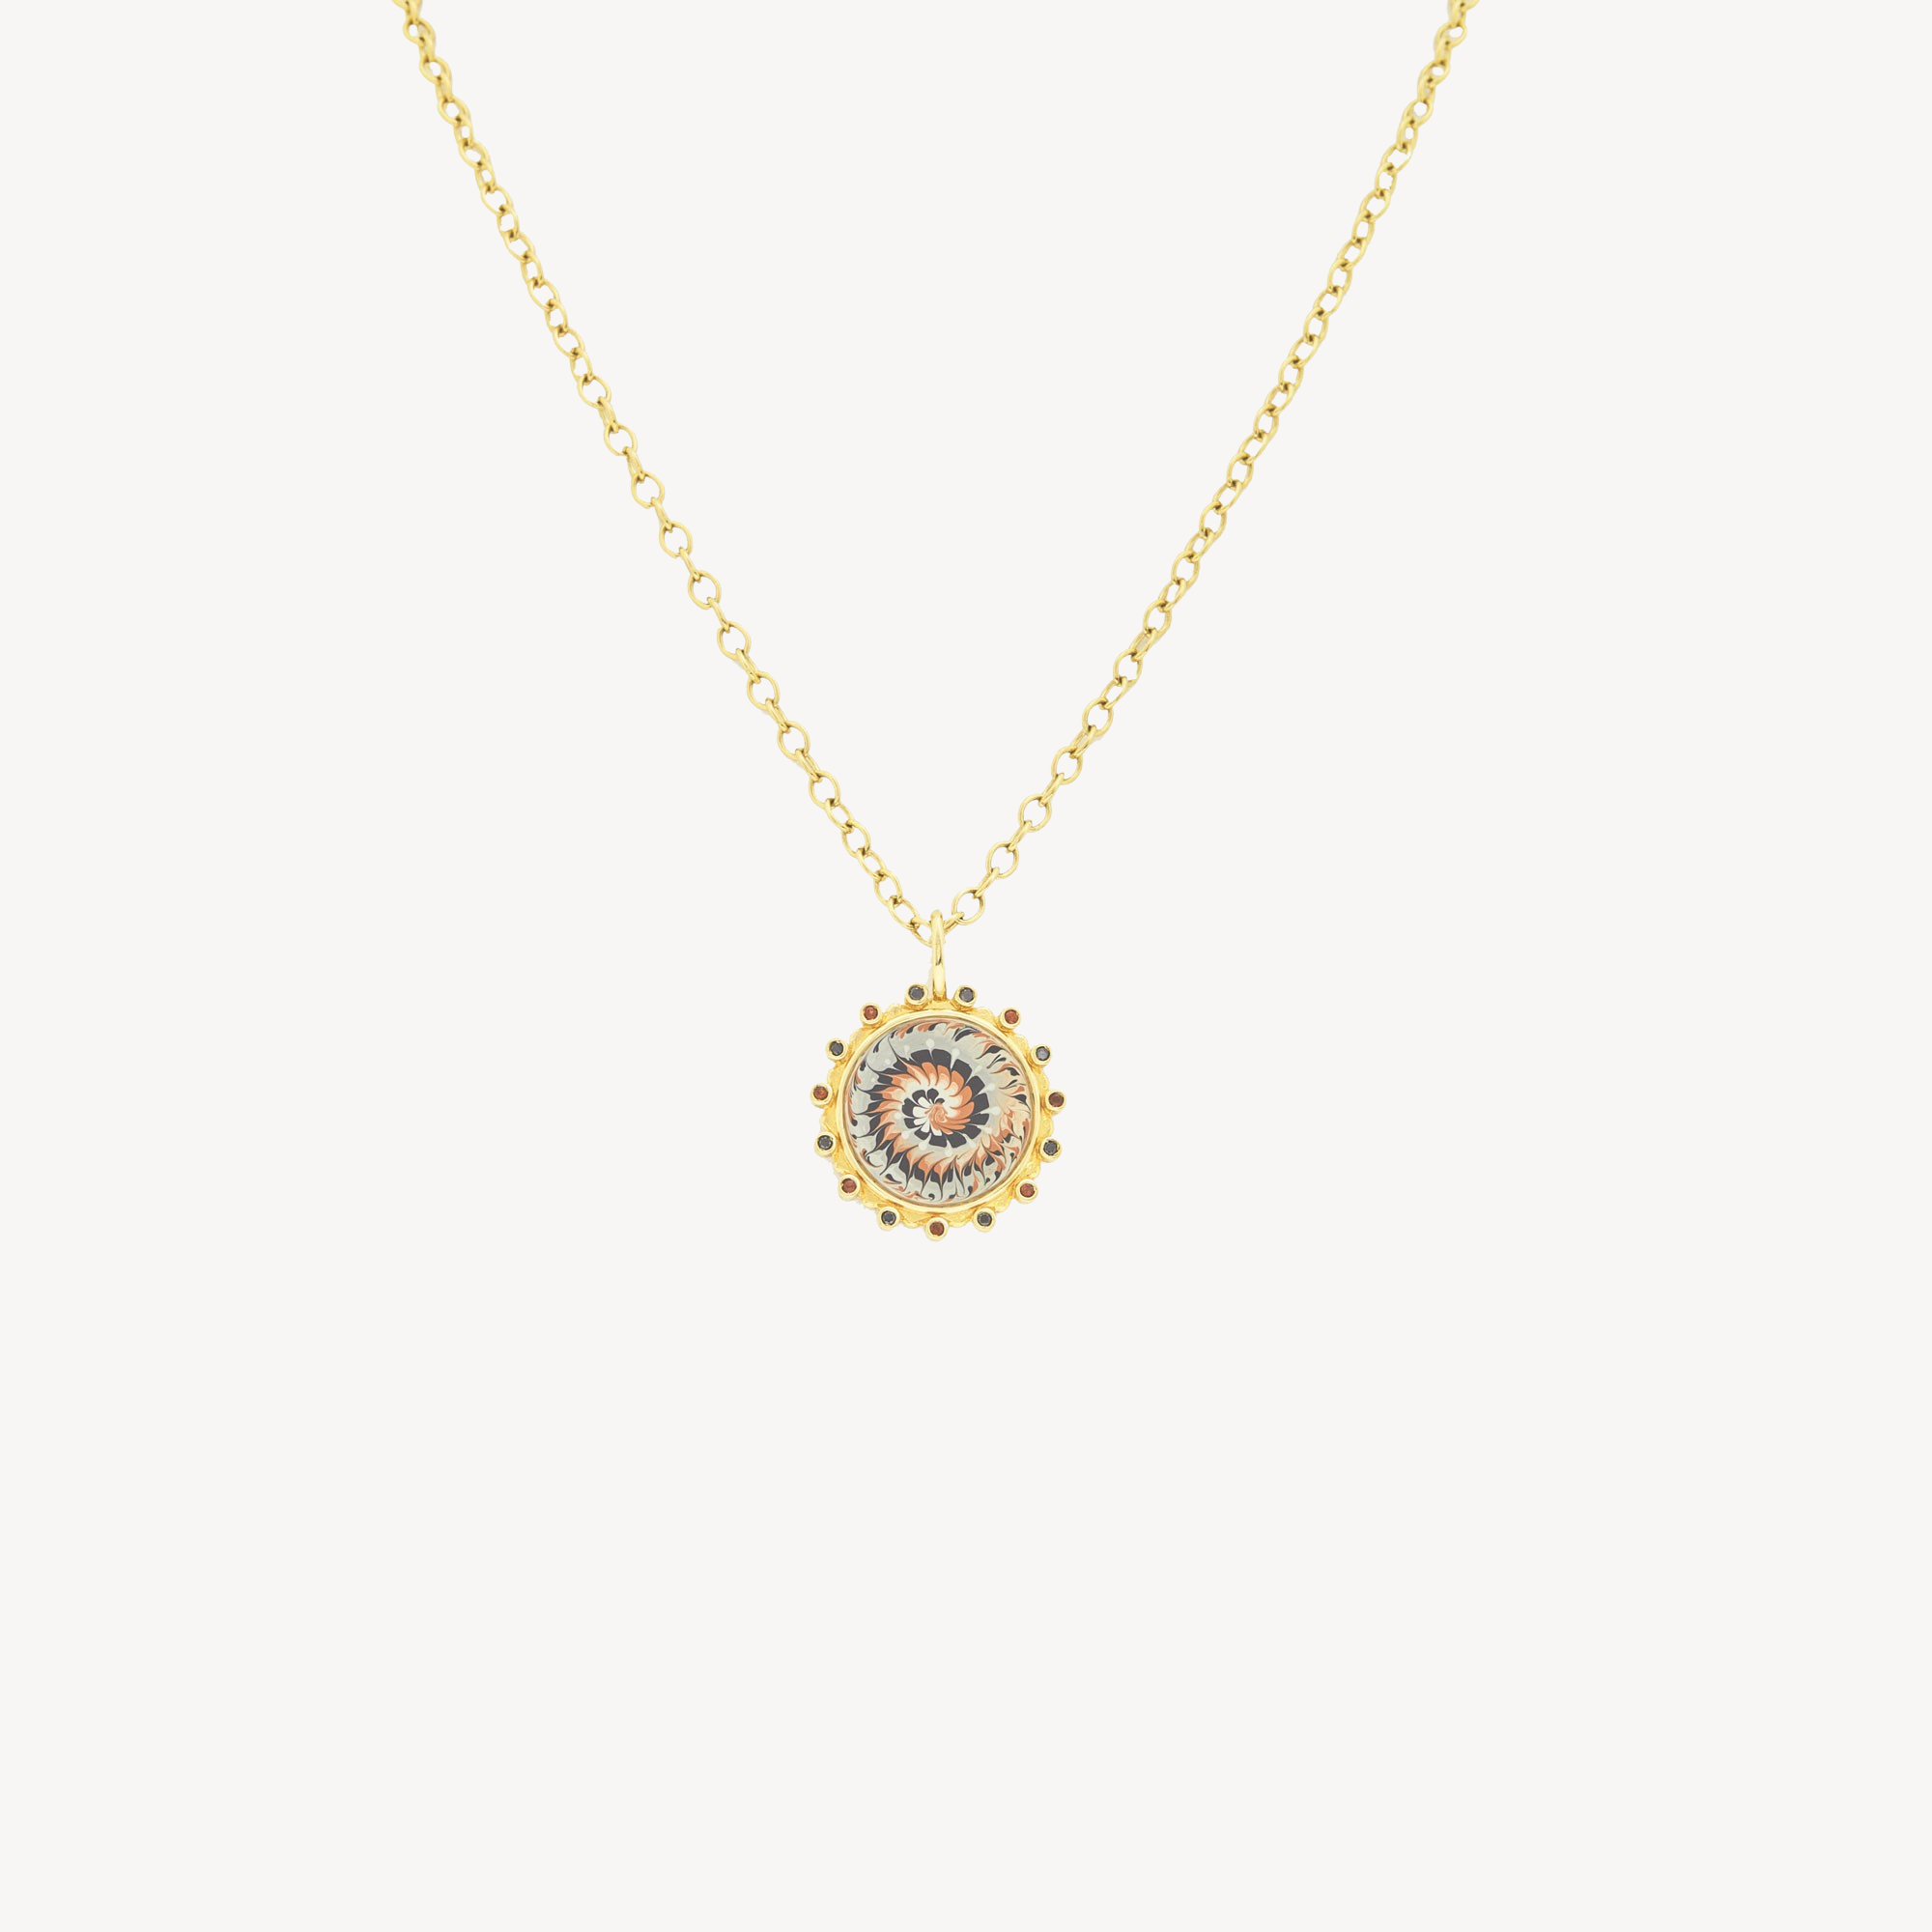 Large Spiral Garnet and Black Diamonds Necklace